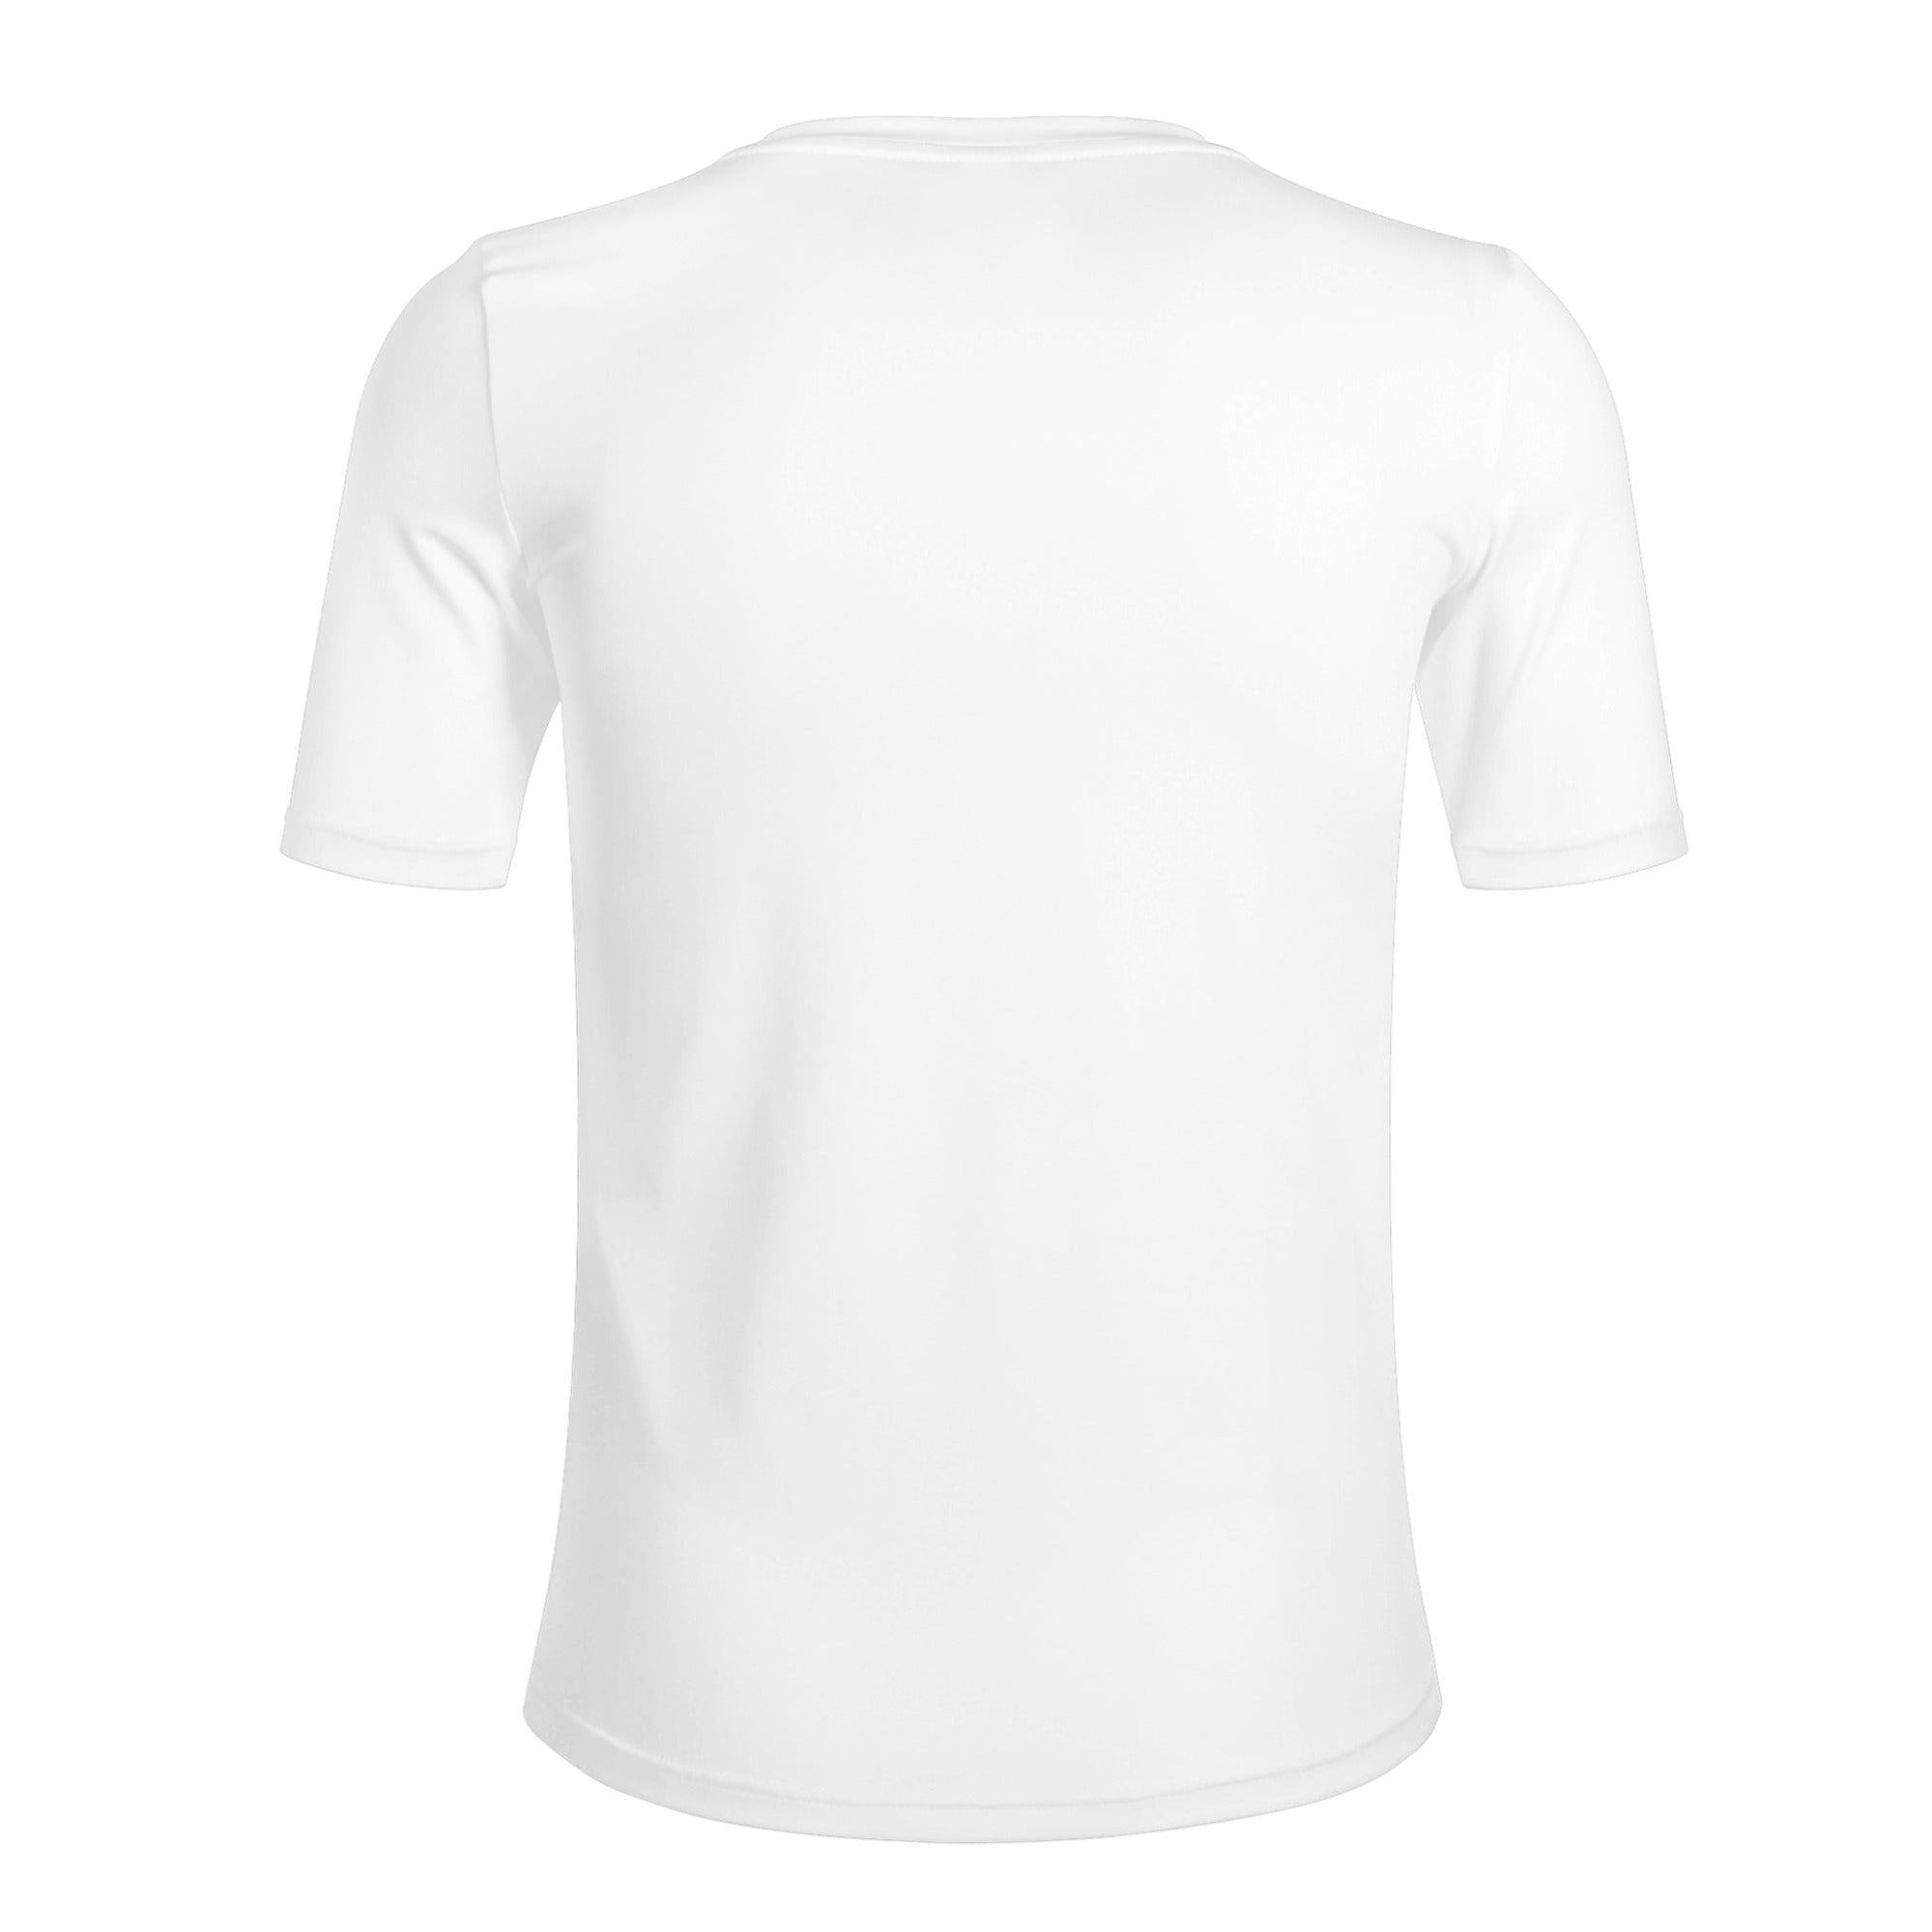 Customizable Blank T-shirts - Kanivee Customs